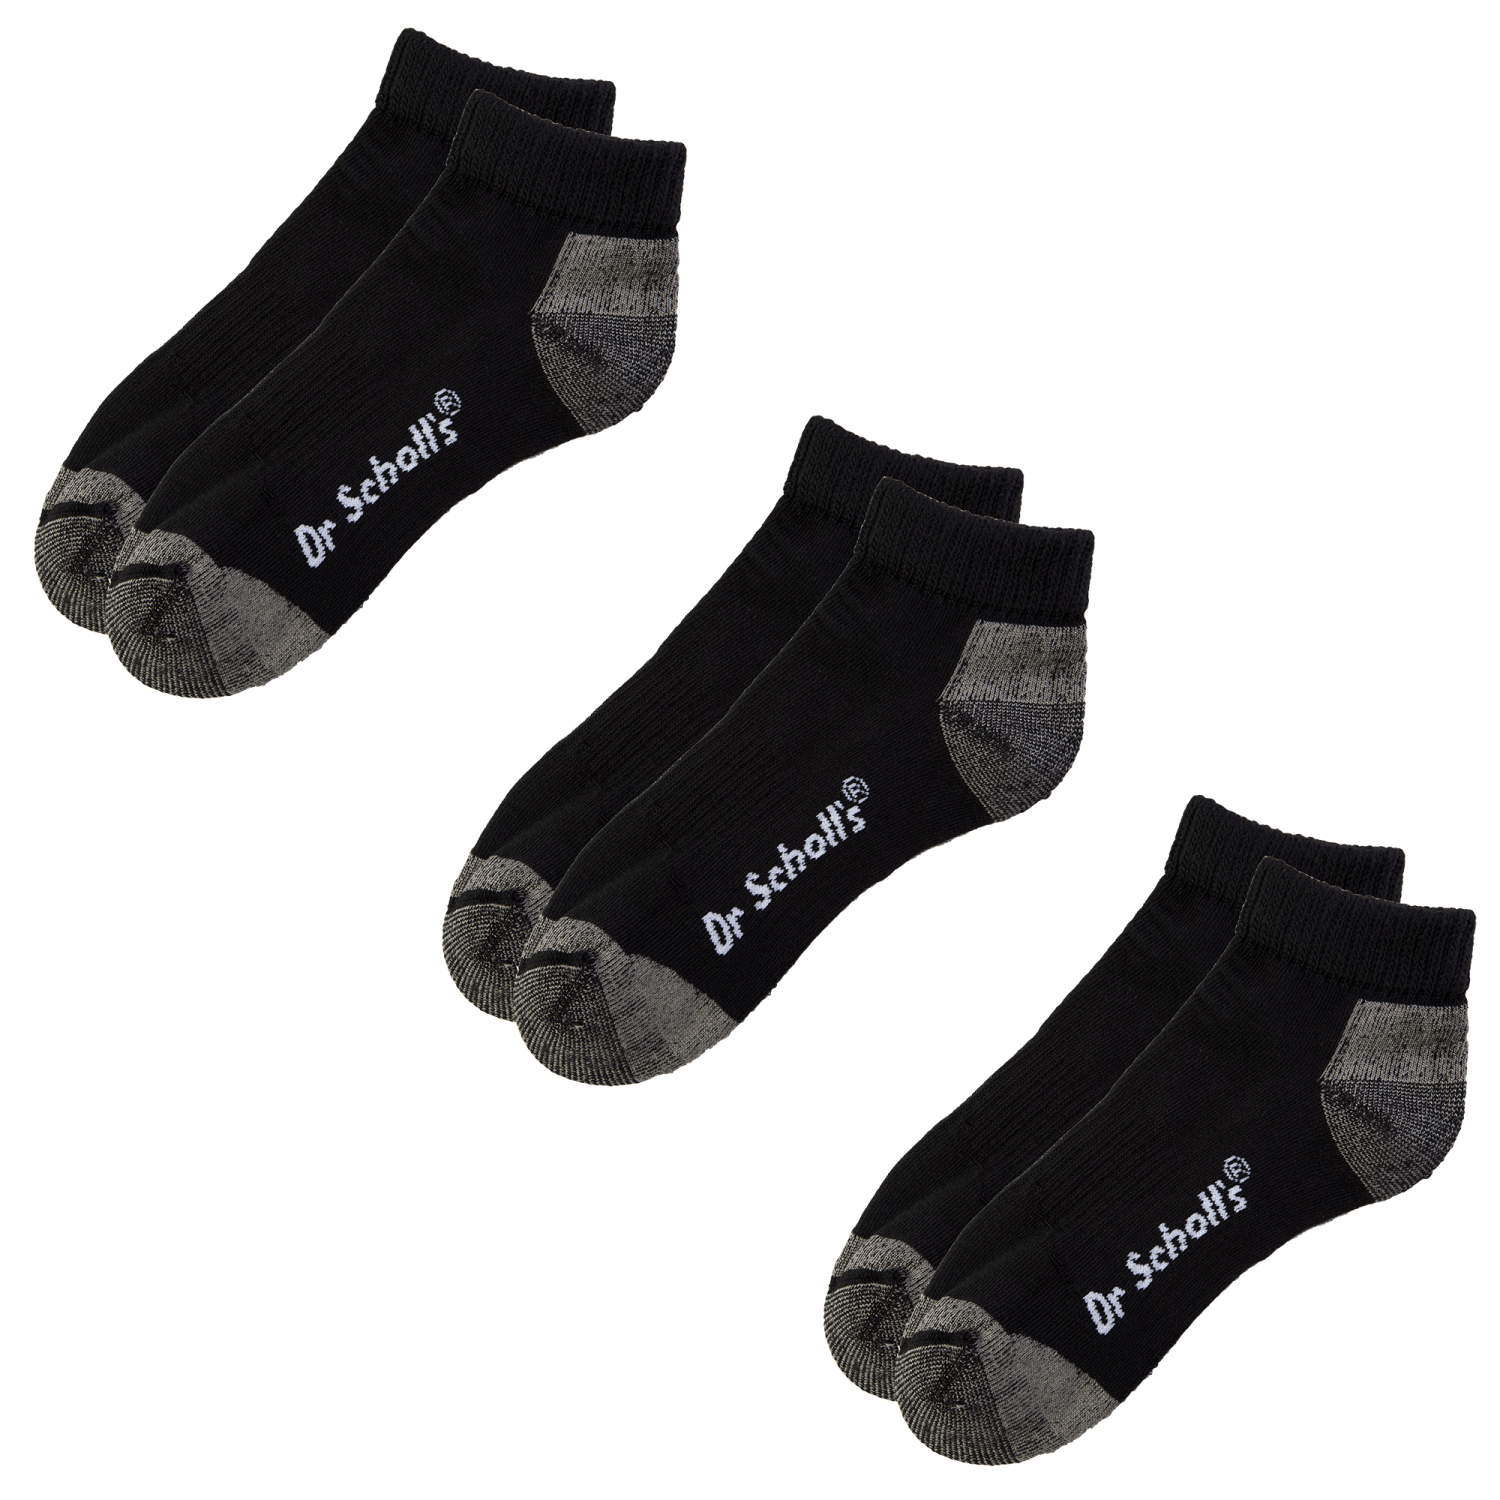 Scholls Women's Tri-Zone Comfort Low Cut Socks 3 Pack Apparel Details about   Dr